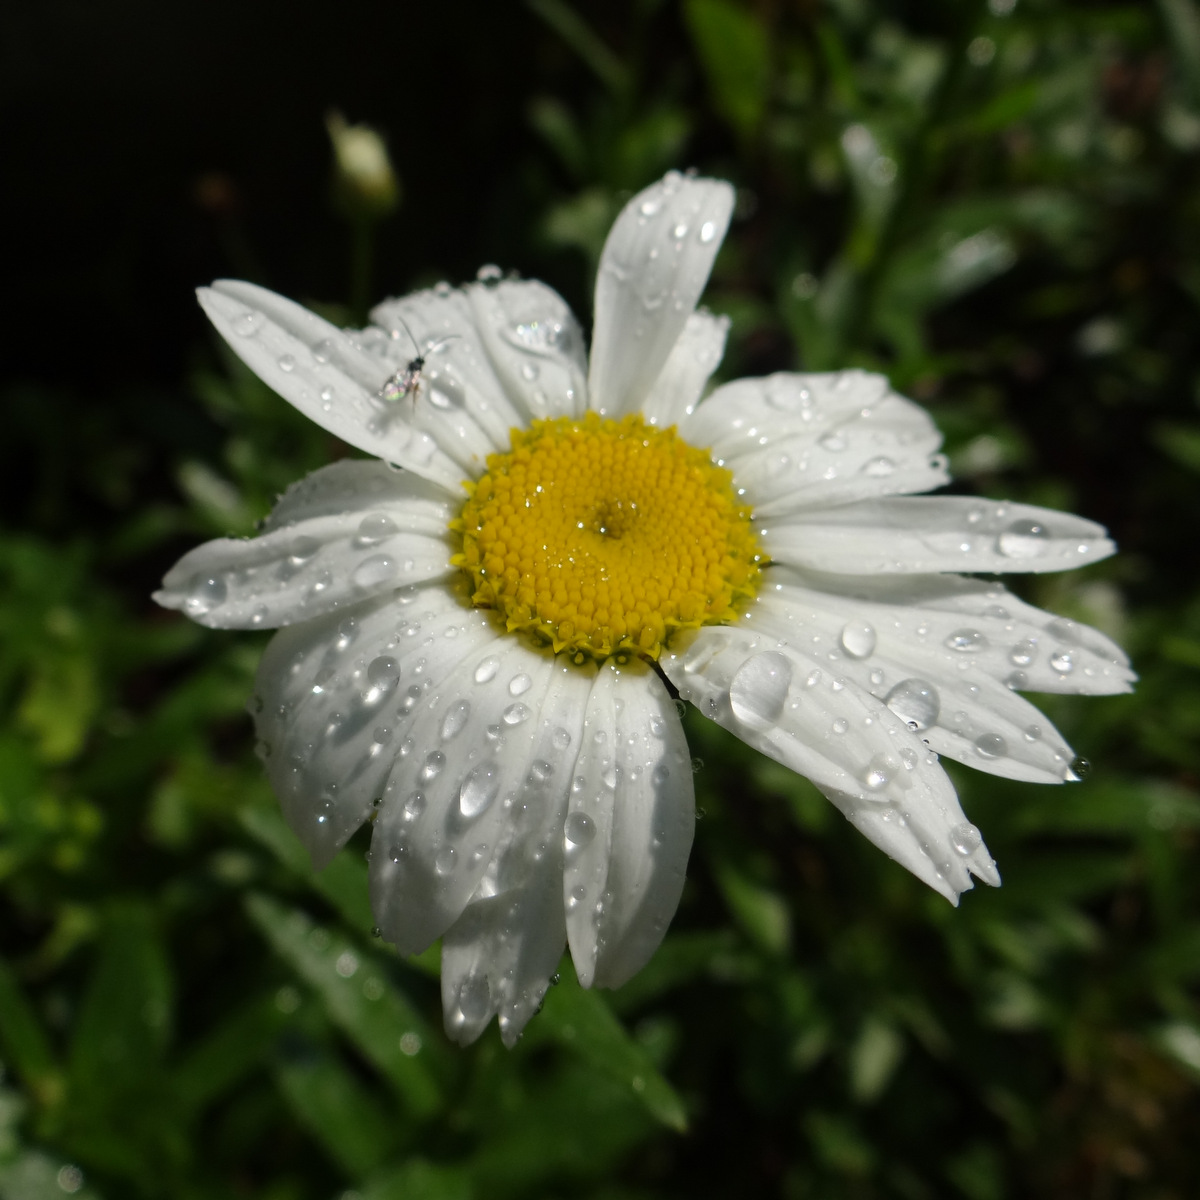 daisy with raindrops on its petals